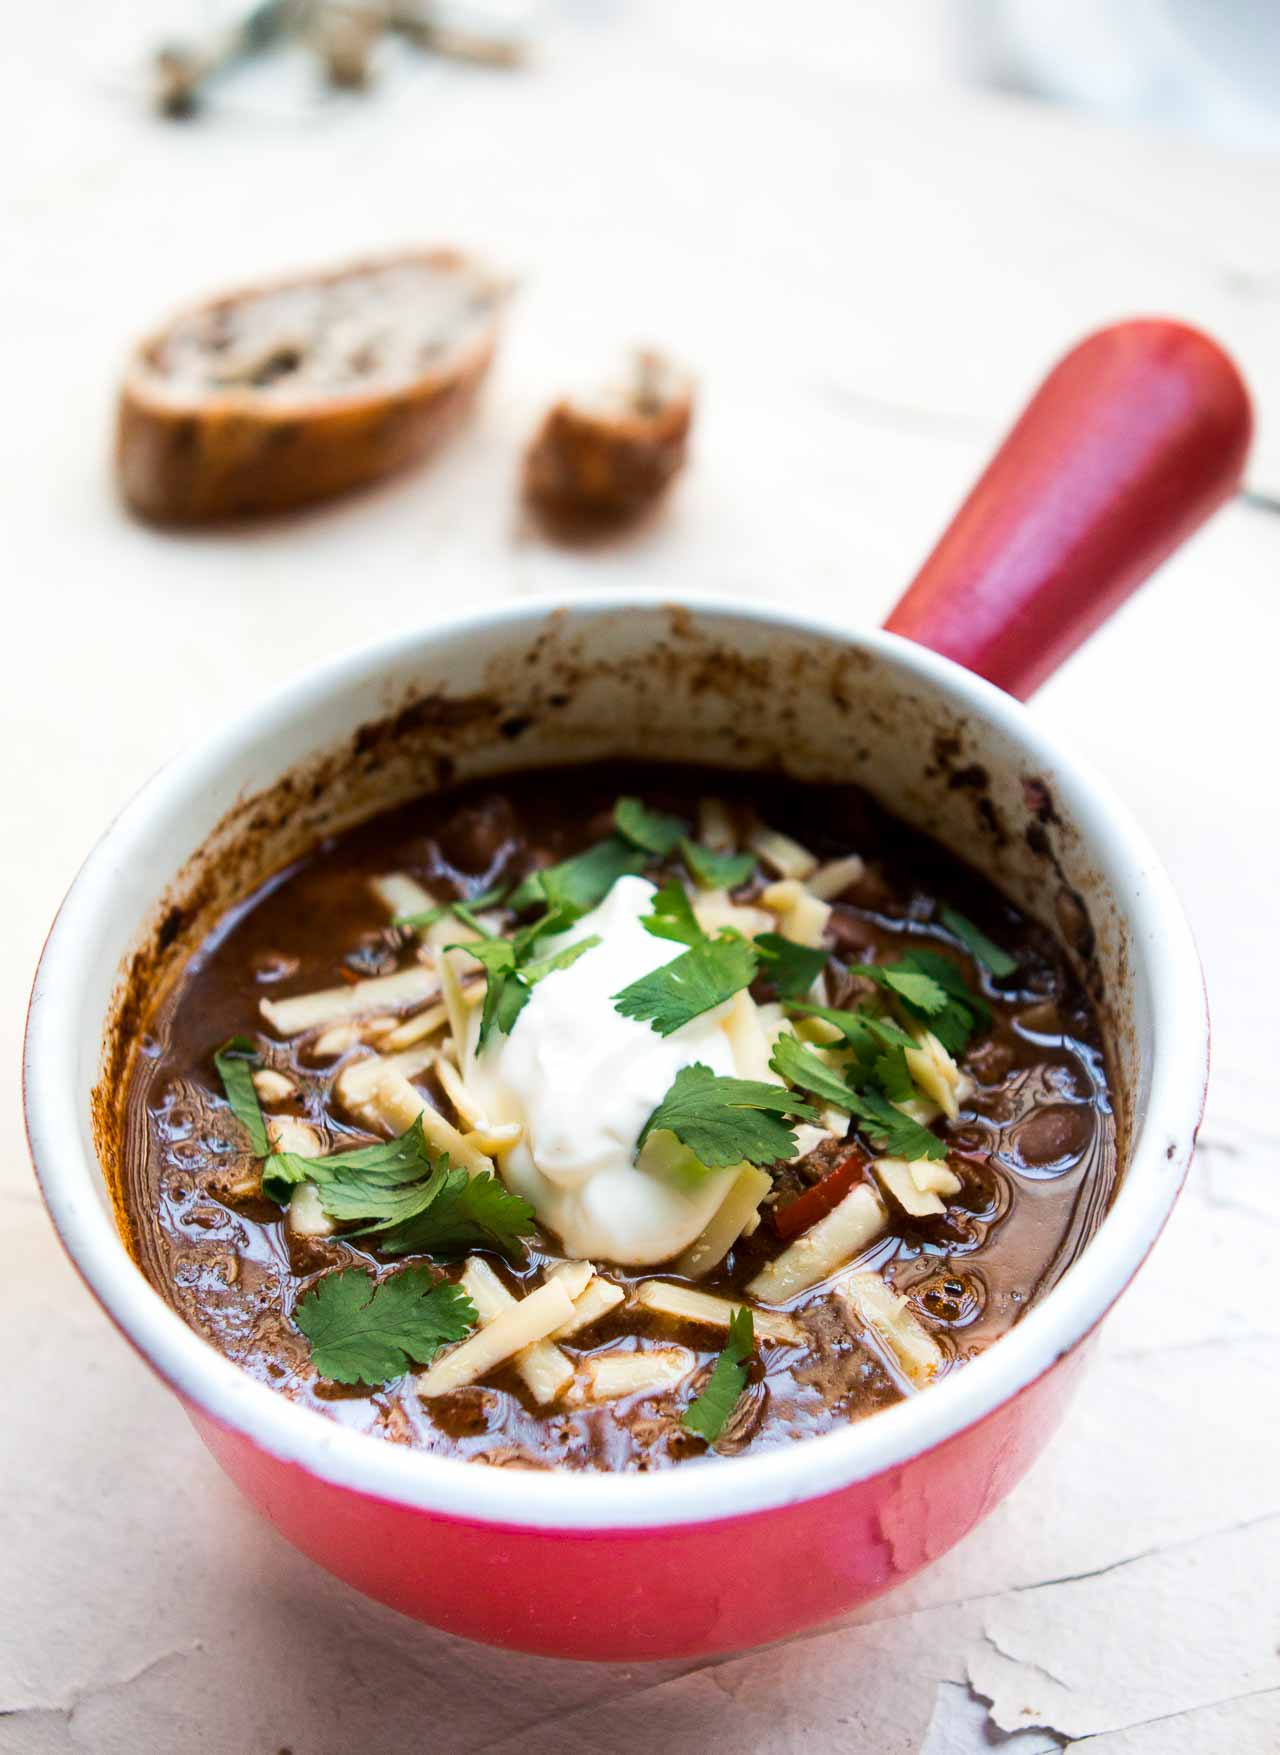 https://www.davidlebovitz.com/wp-content/uploads/2020/11/slow-cooker-crockpot-chile-chili-recipe-6.jpg